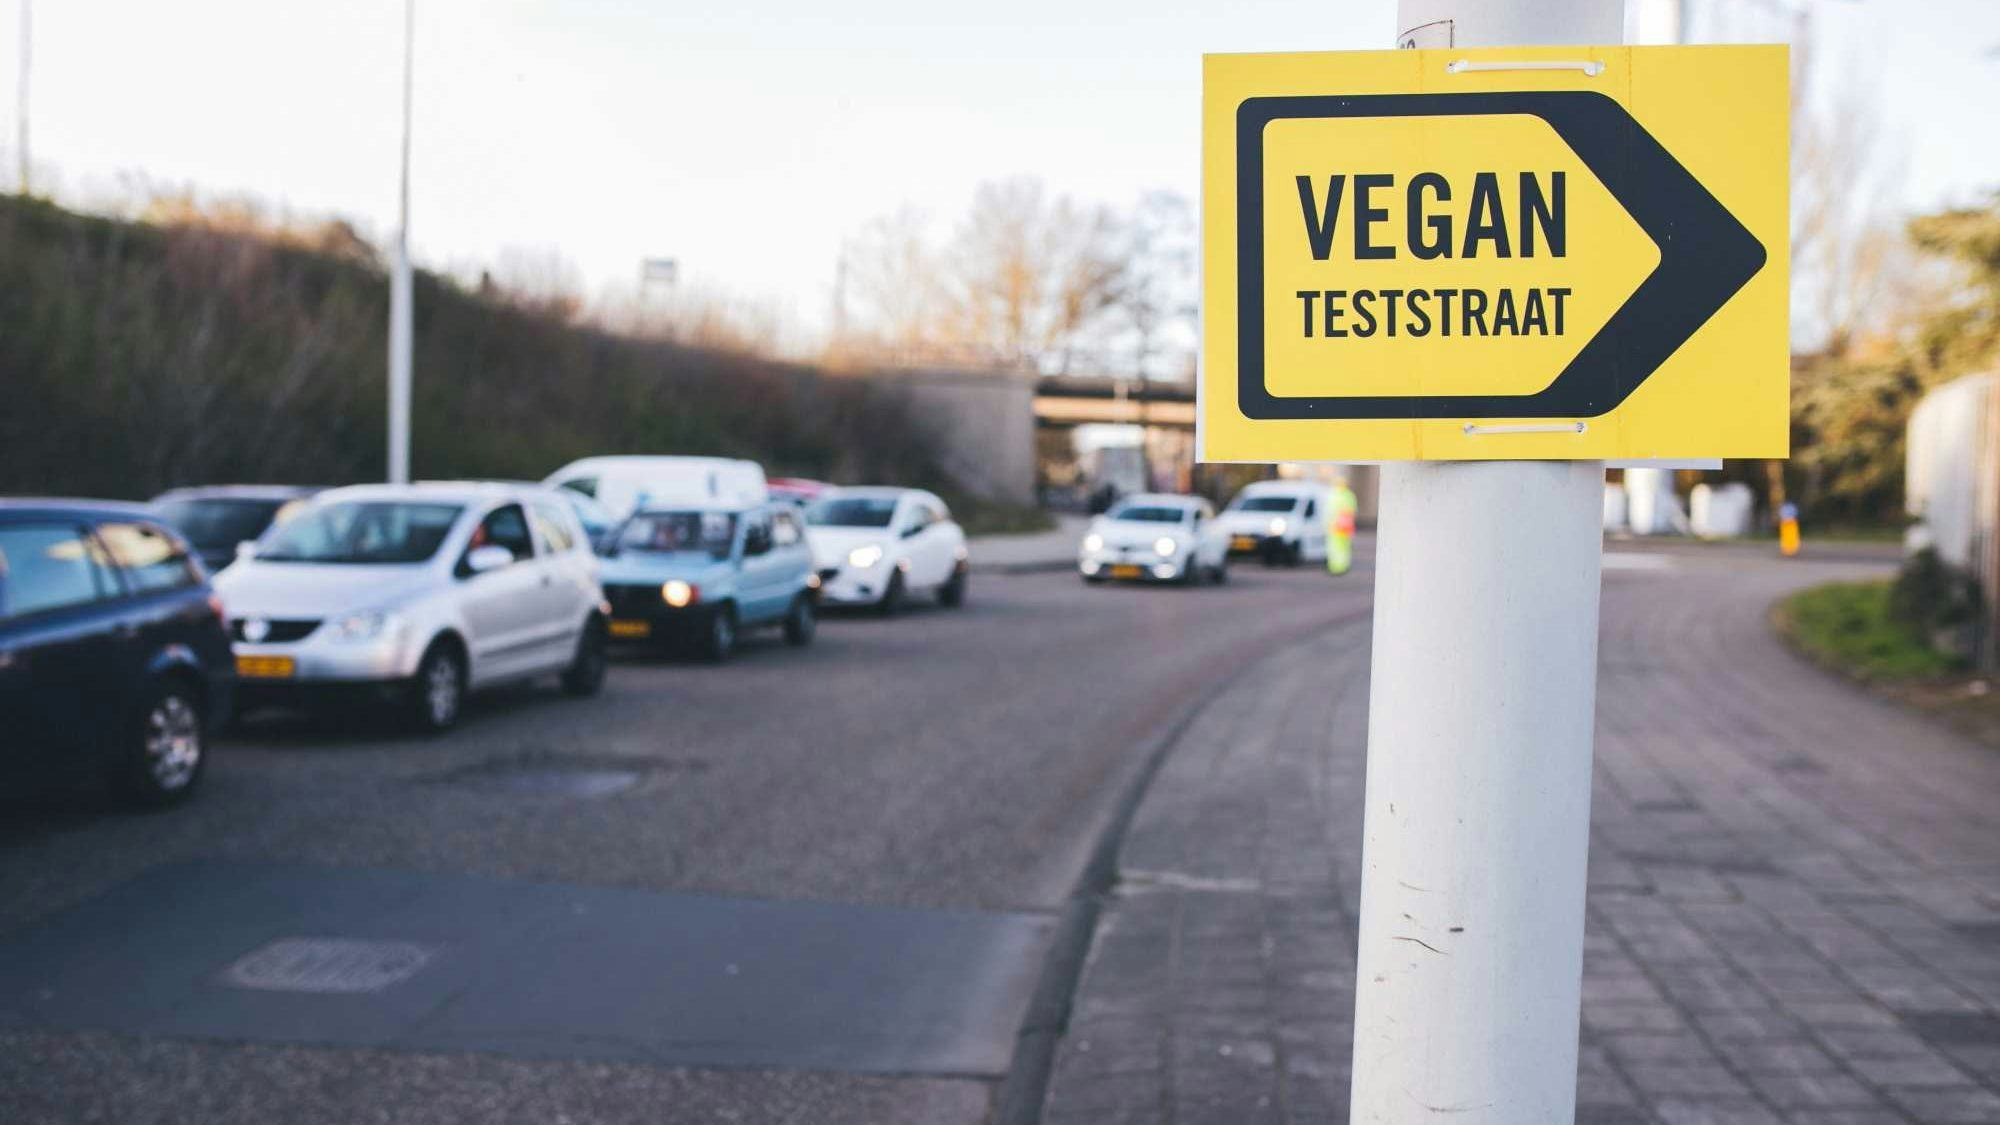 Vegan teststraat serveert 600 vegan burgers in 3,5 uur